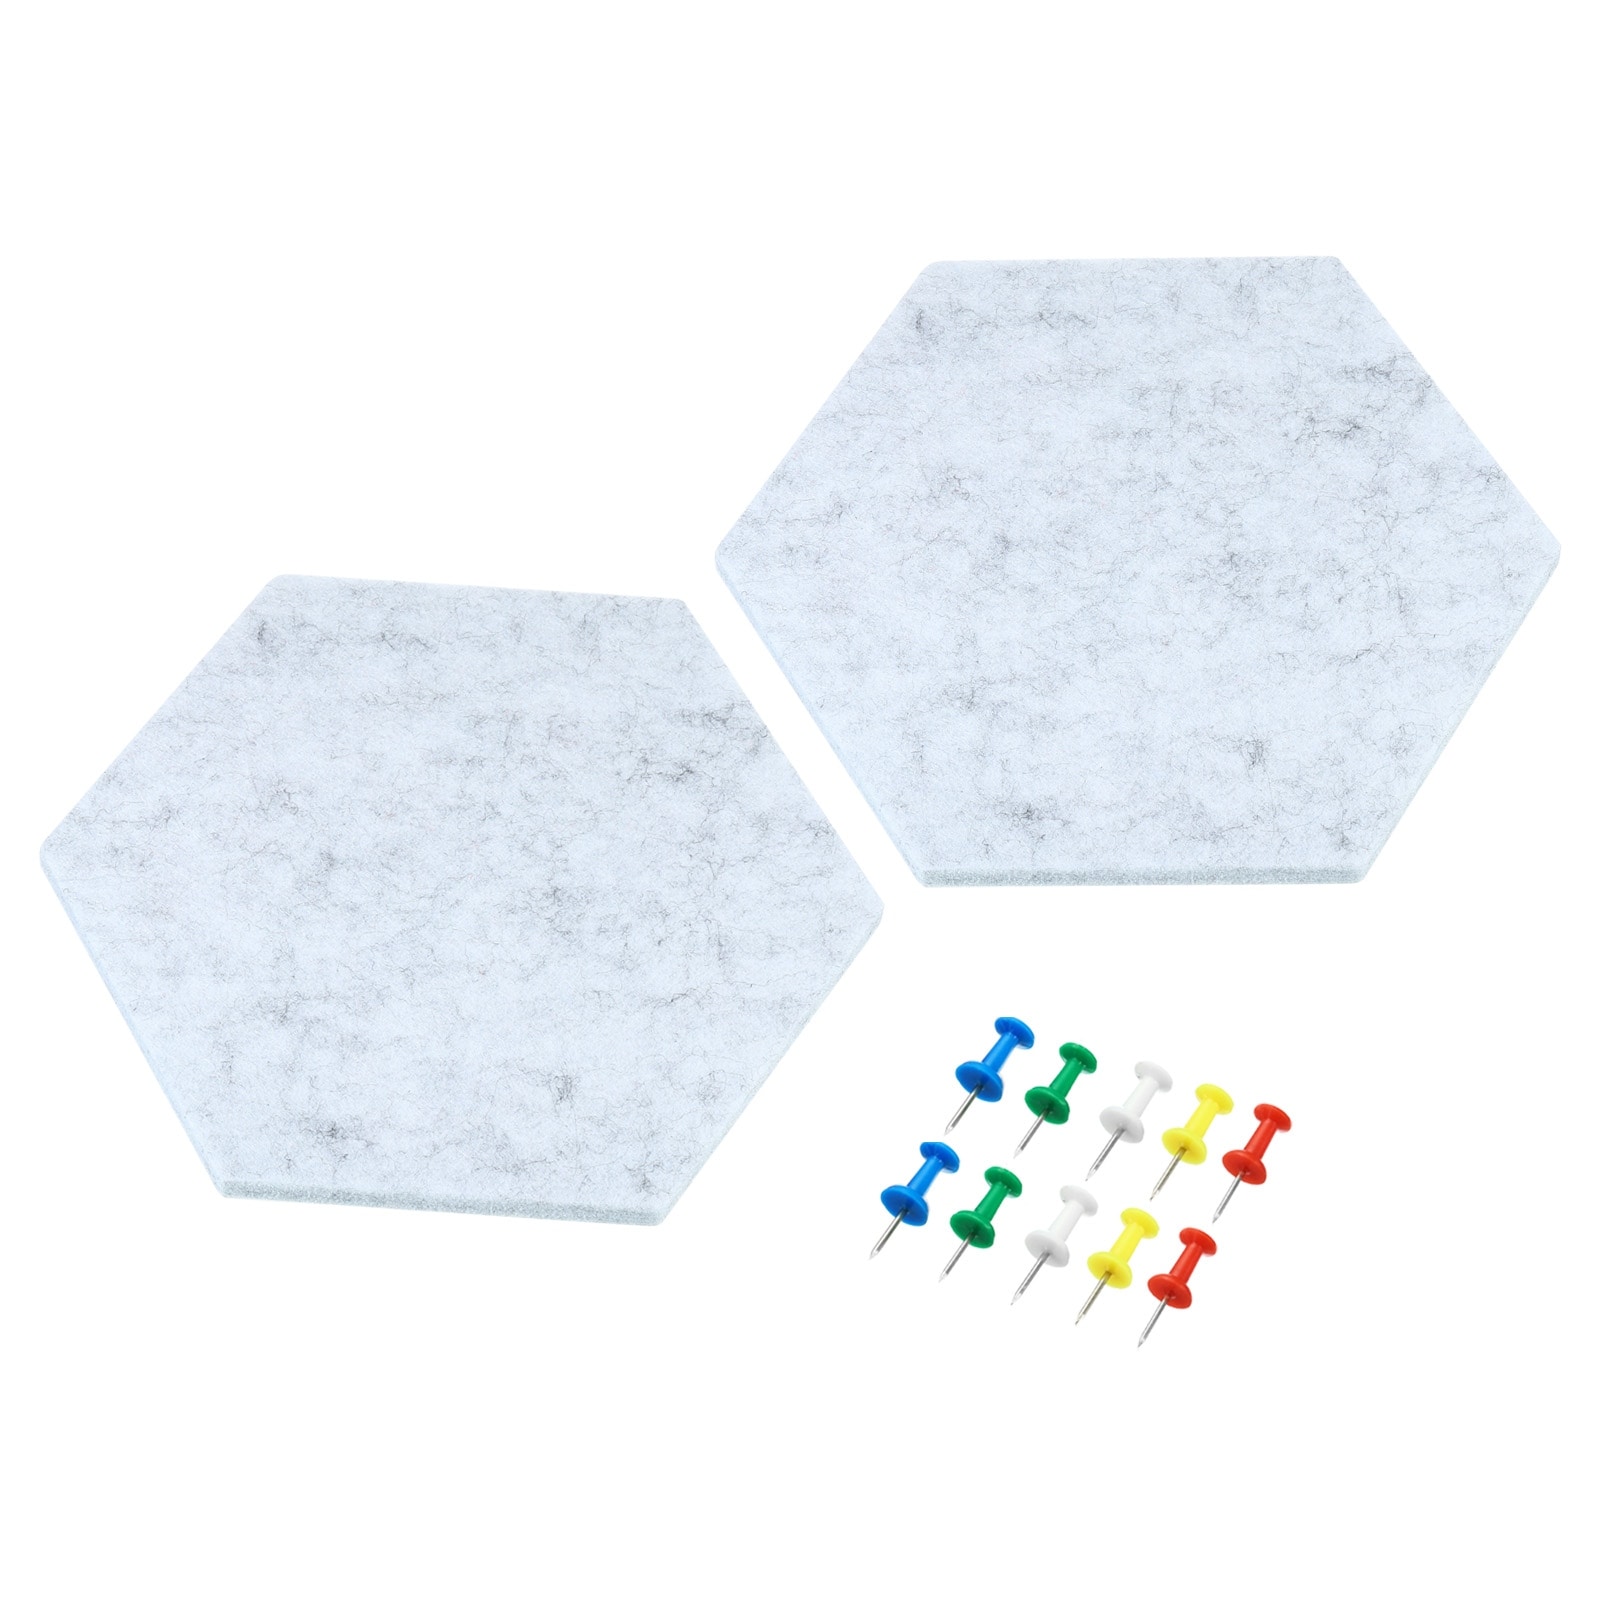 https://ak1.ostkcdn.com/images/products/is/images/direct/0830c7ad67caaac62e352509a750cc540a6ed46e/2Pcs-Self-Adhesive-Wall-Bulletin-Hexagon-Felt-Board-Tiles-Push-Pin-Gray.jpg